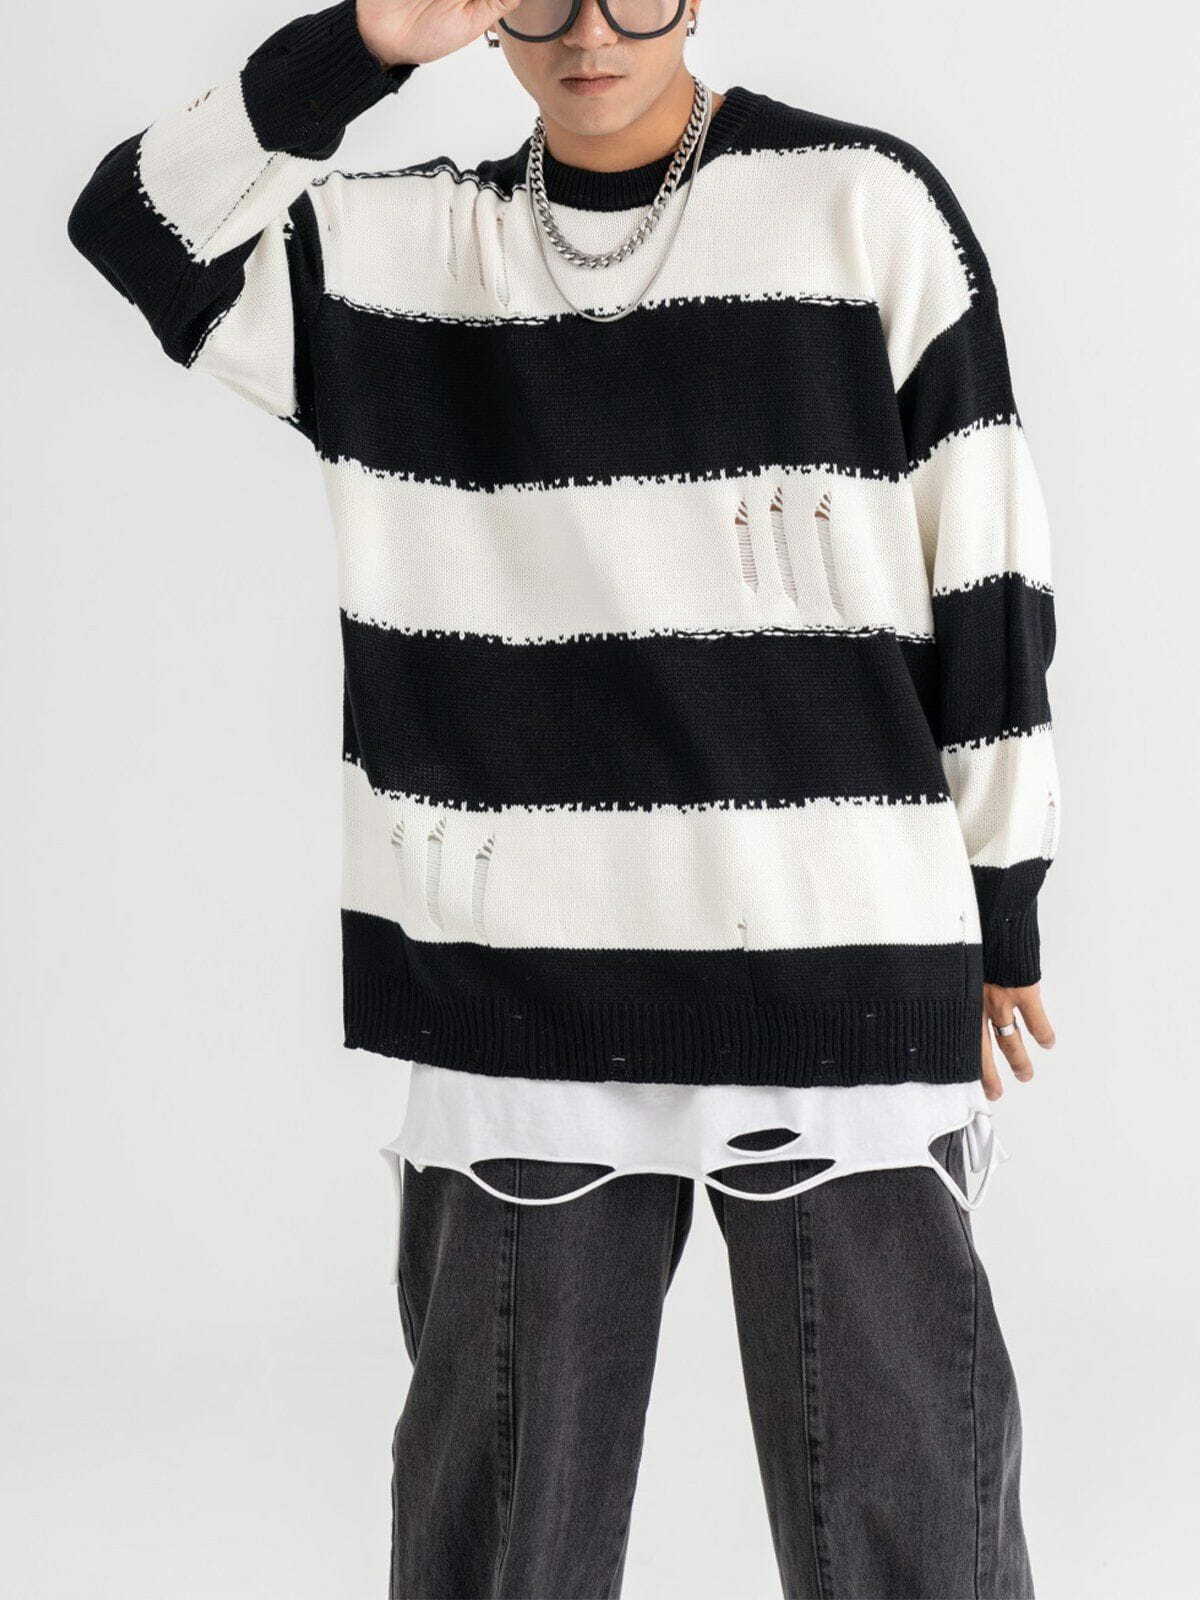 ripped jacquard sweater edgy streetwear staple 5032